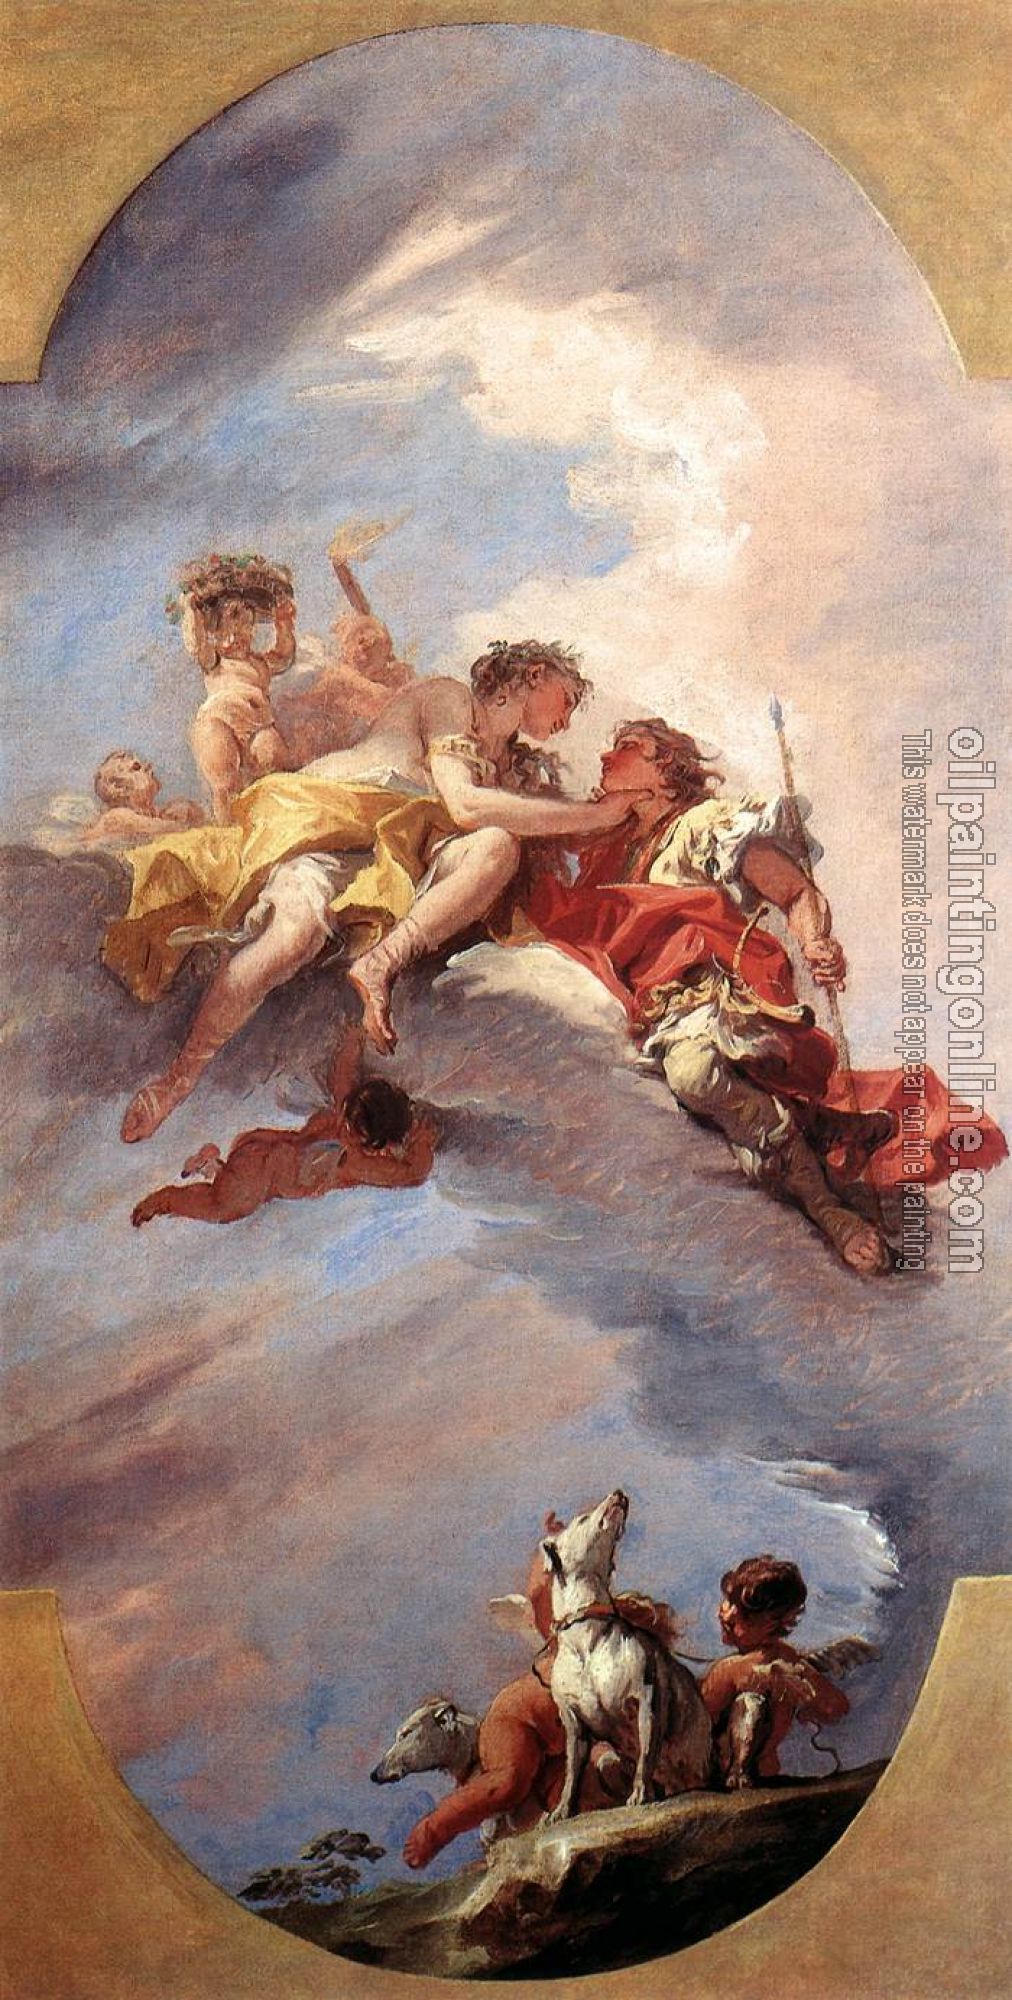 Ricci, Sebastiano - Venus and Adonis